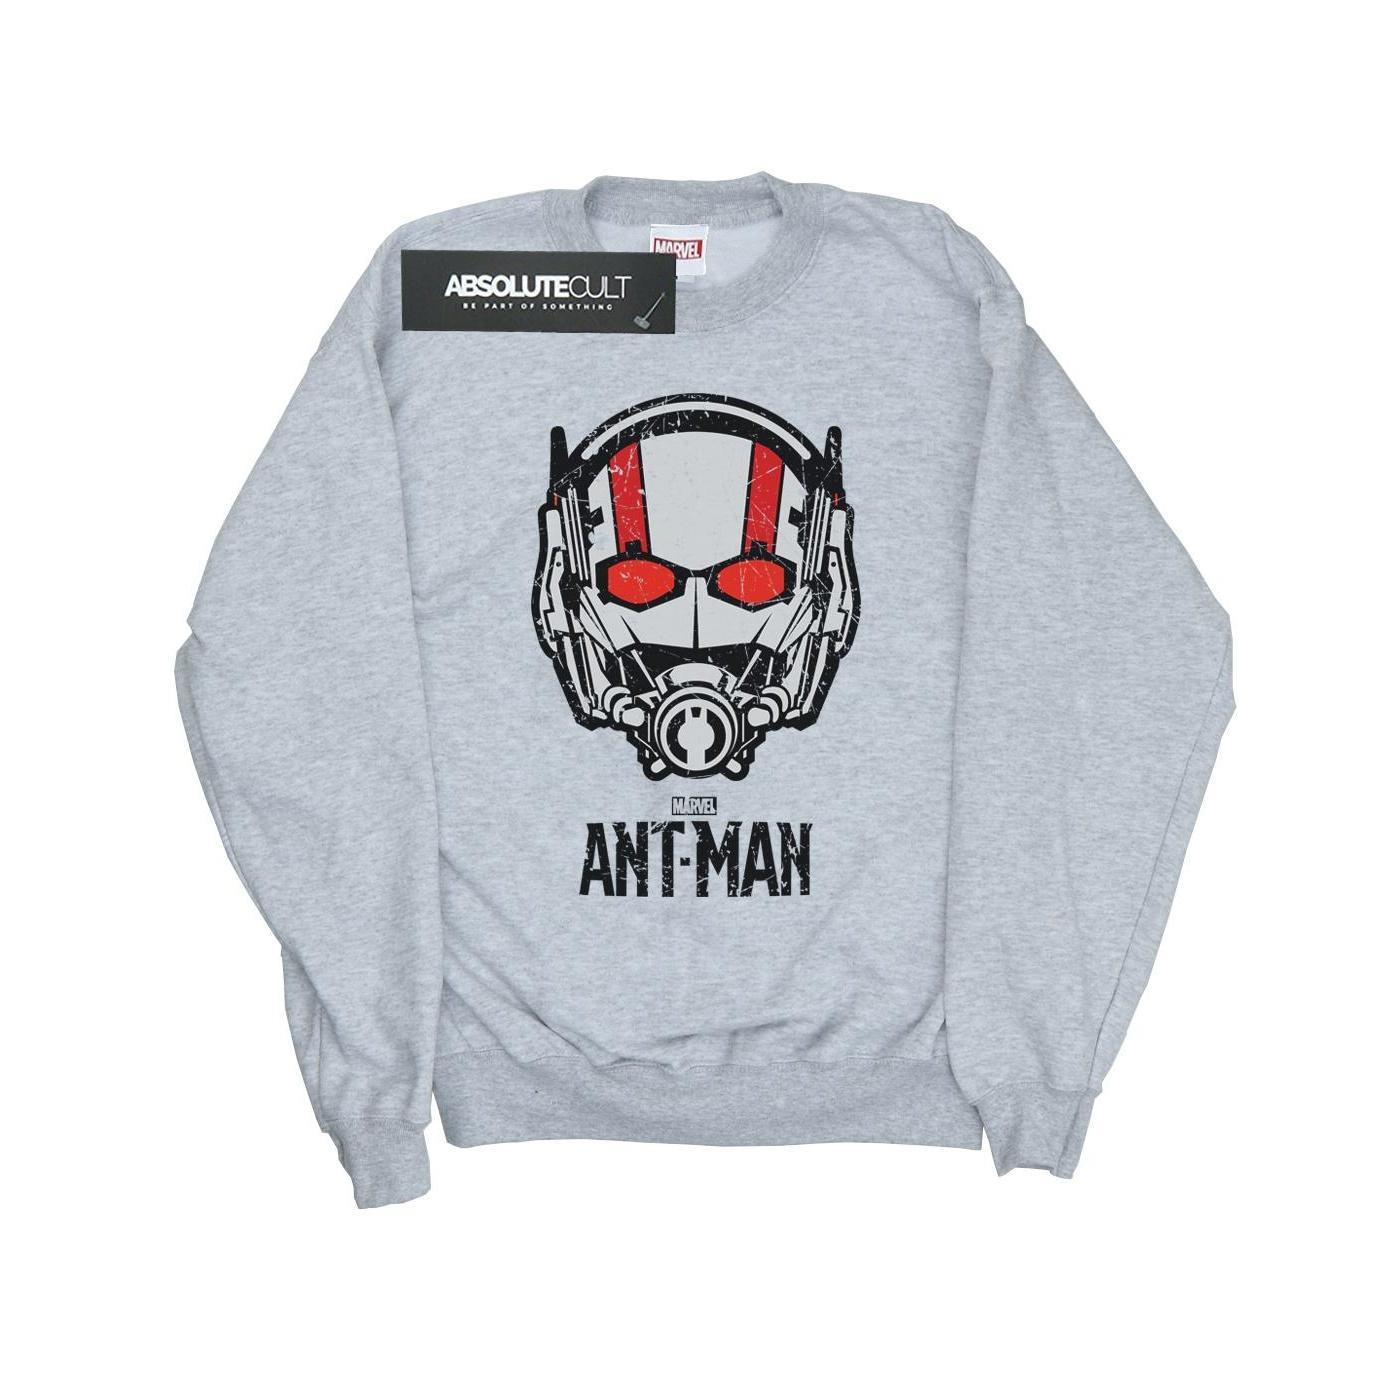 Marvel Girls Ant-Man Helmet Sweatshirt (Sports Grey) (7-8 Years)